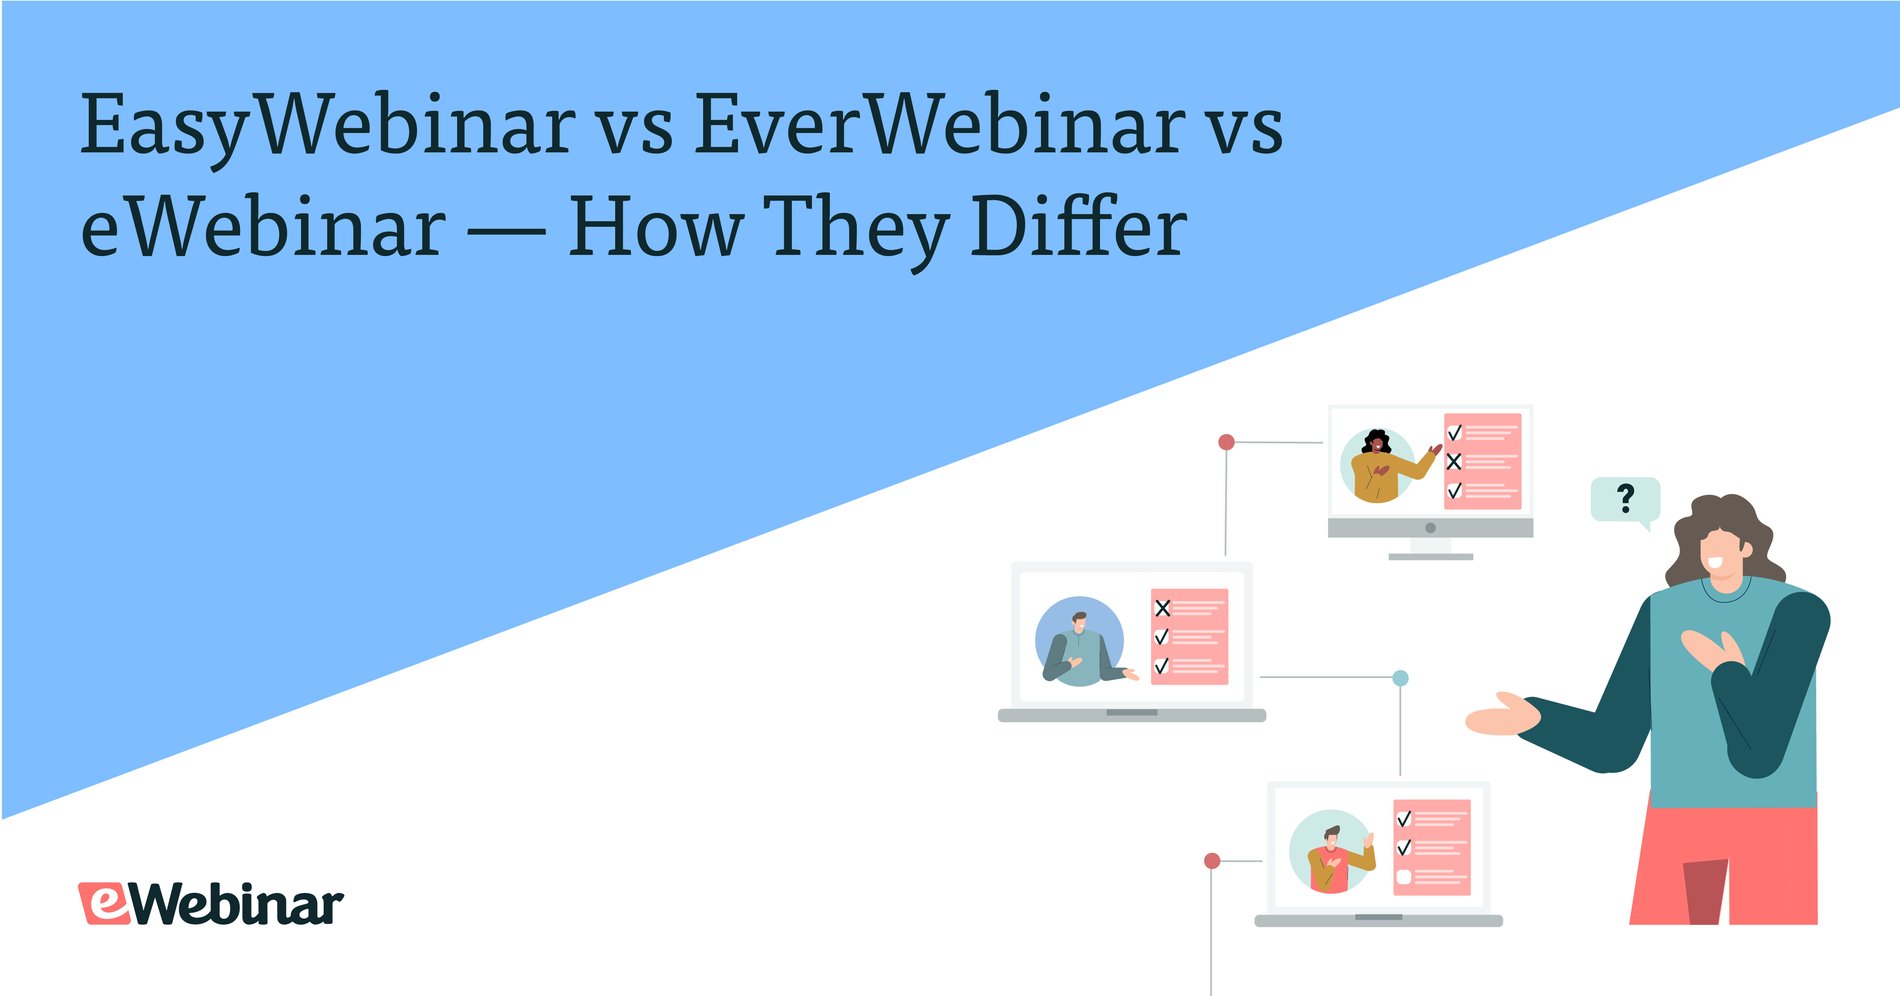 EasyWebinar vs EverWebinar vs eWebinar - Comment se différencient-ils ?